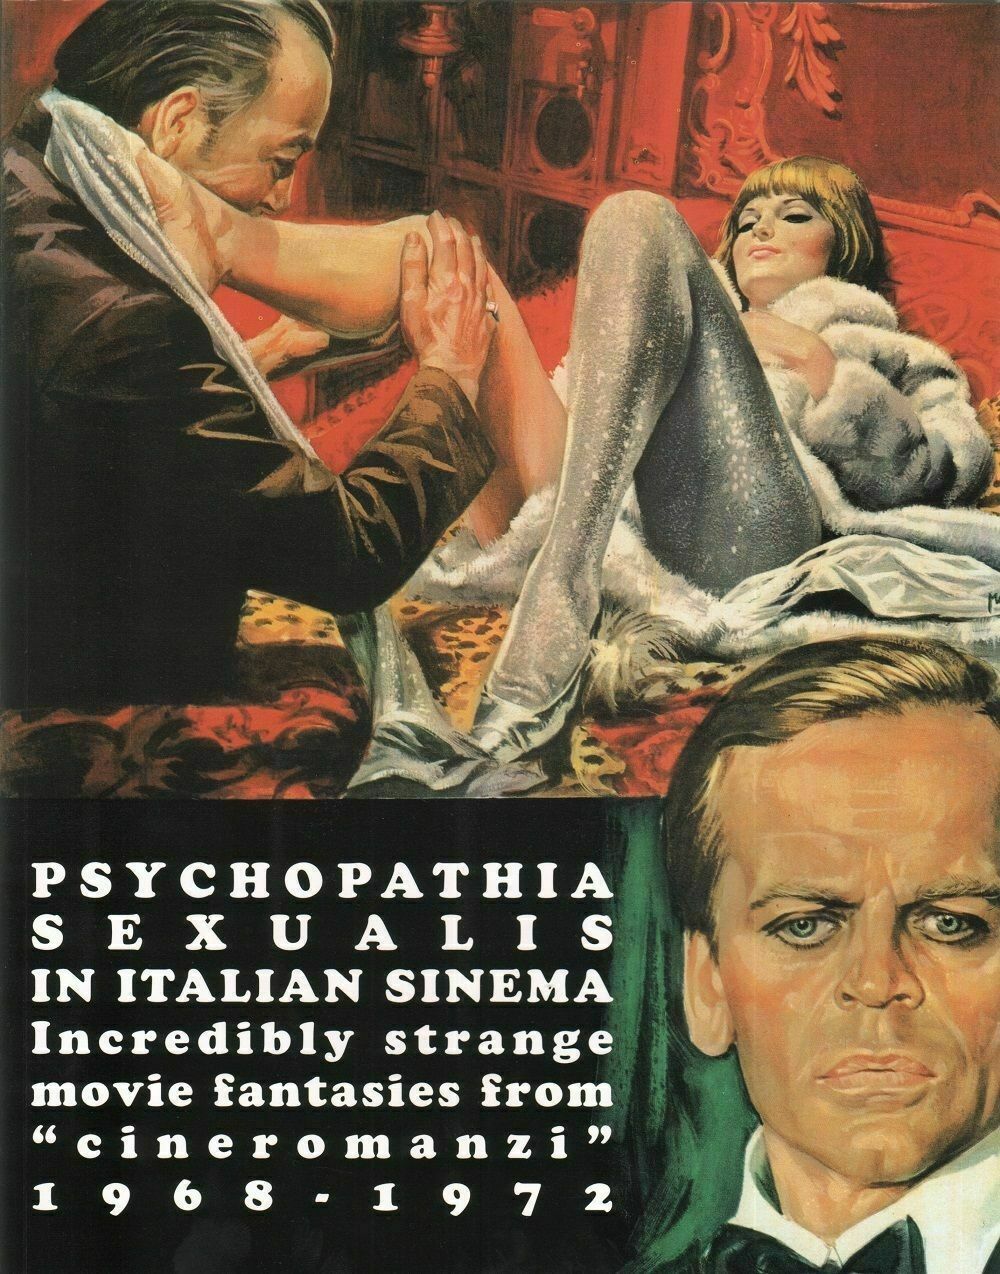 PSYCHOPATHIA SEXUALIS in Italian sinema. Incredibly strange movie fantasies f...